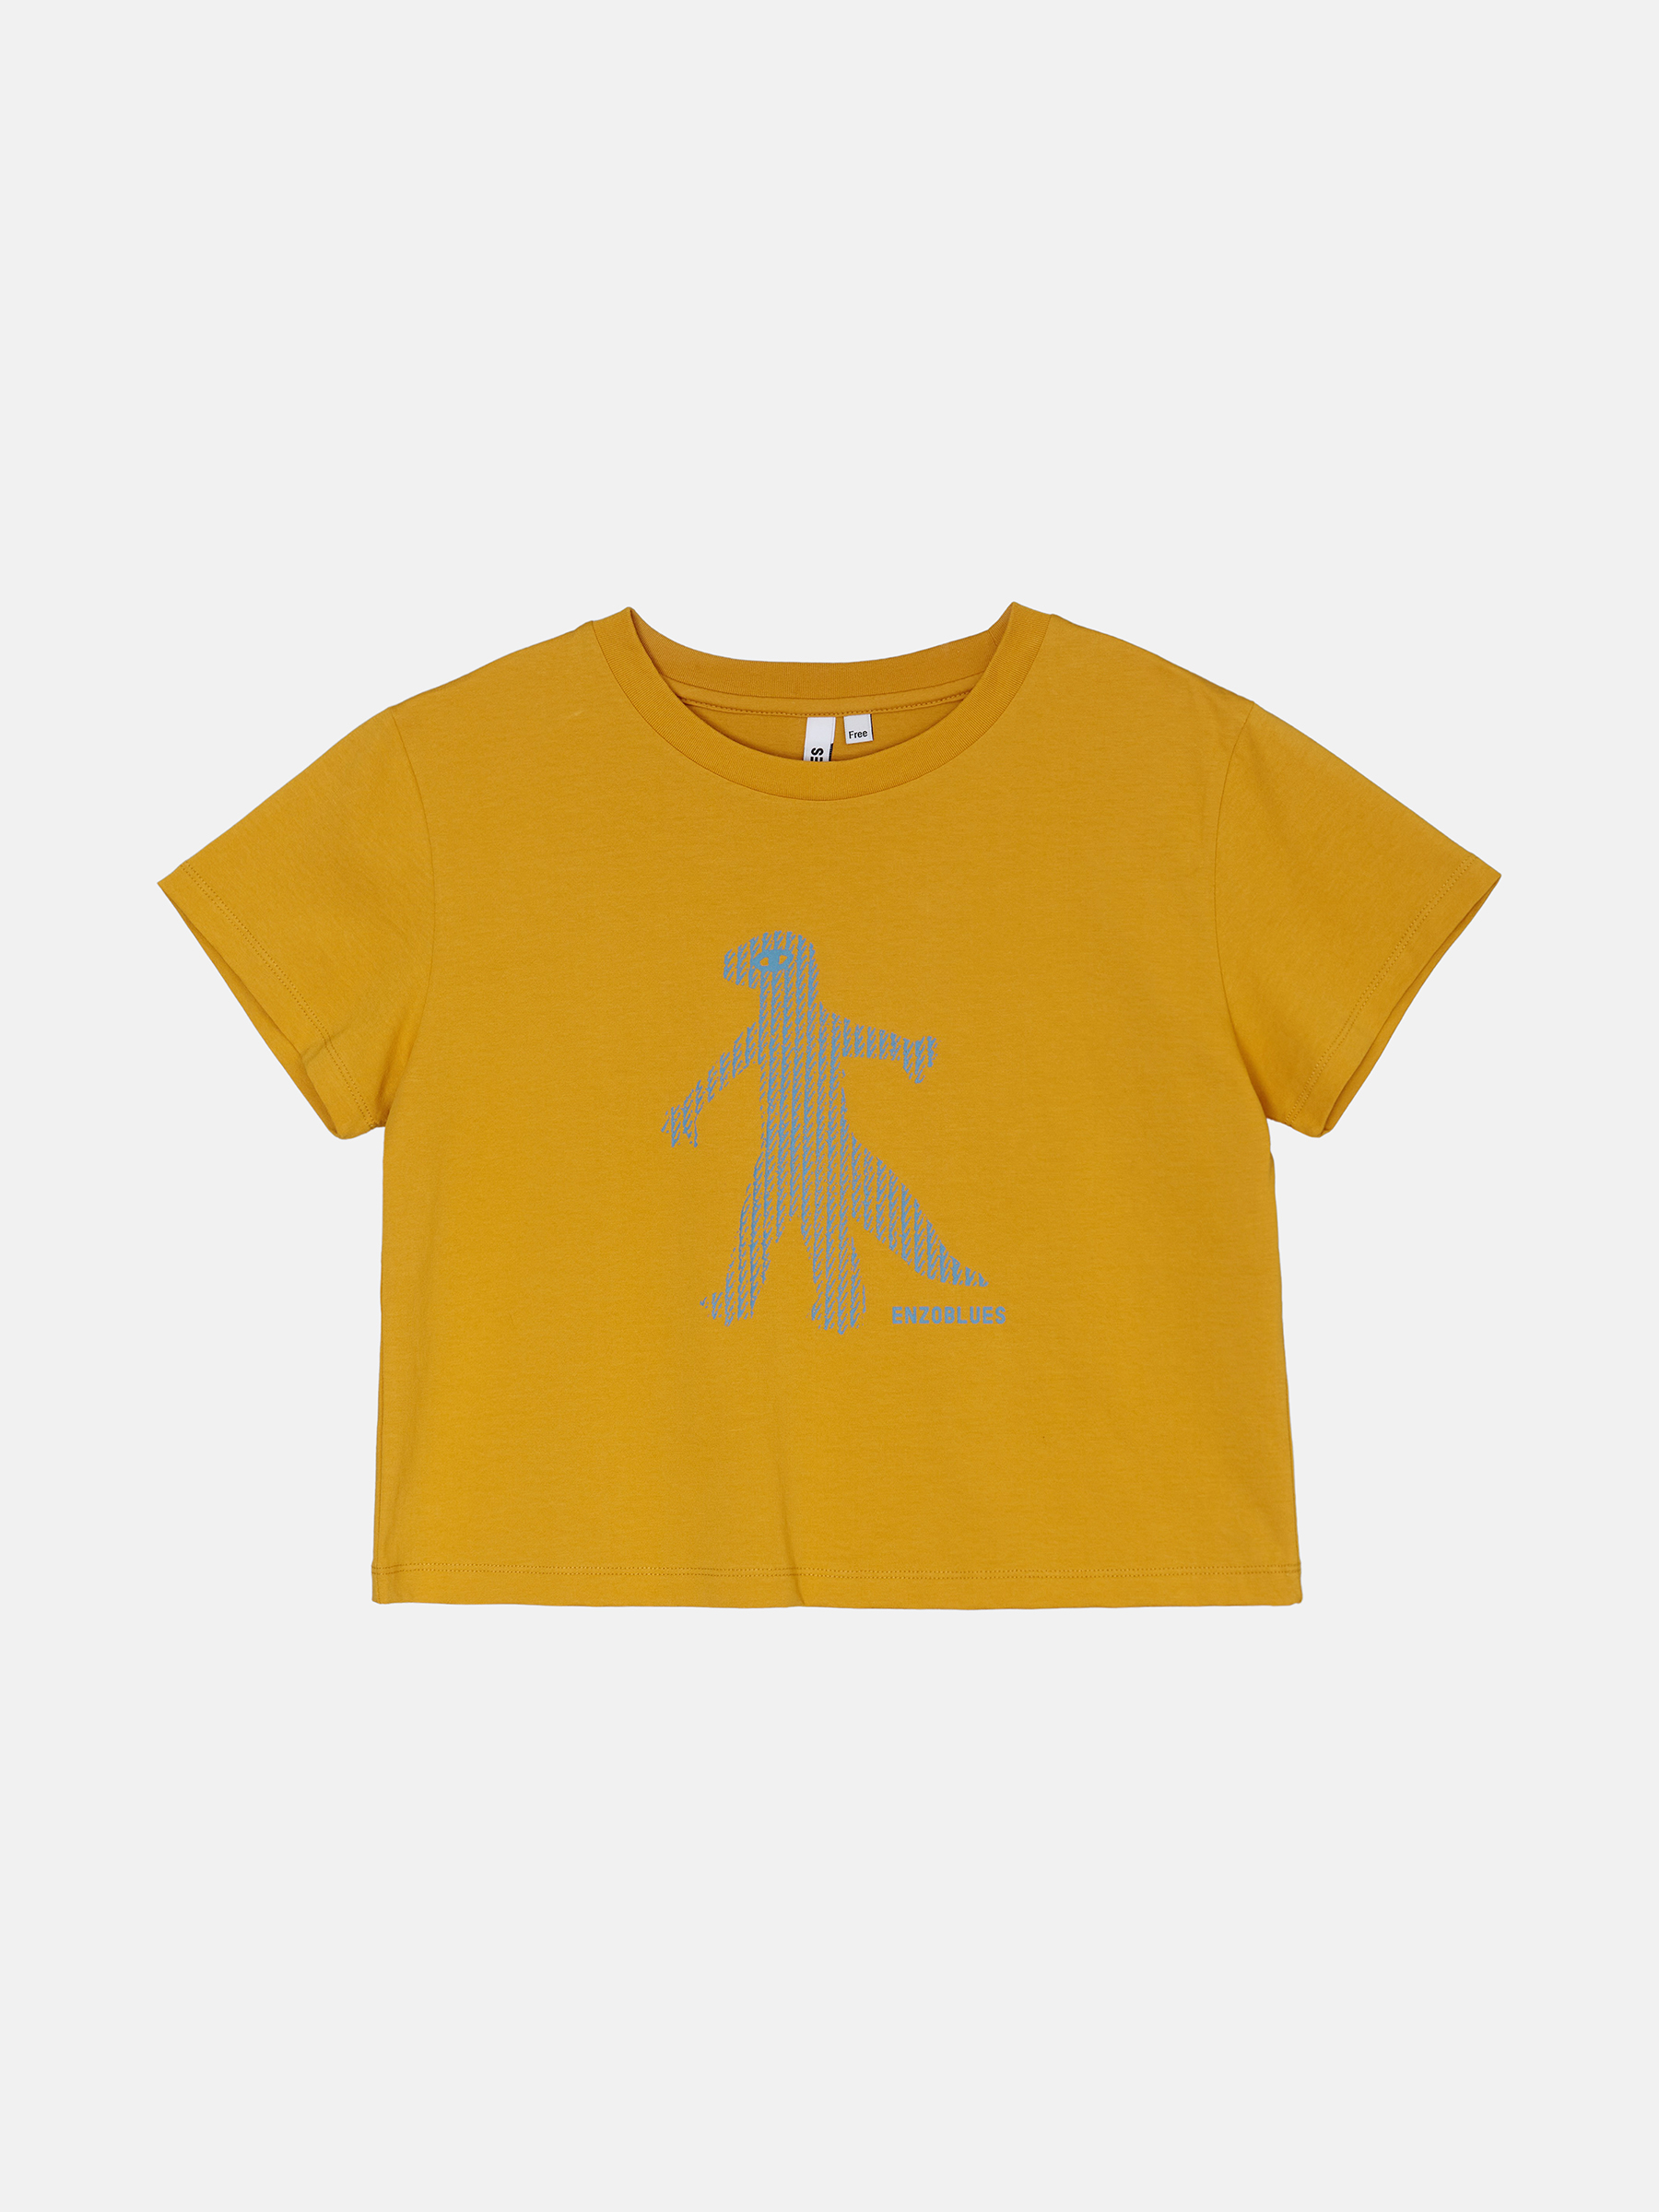 Dinosaur 티셔츠 (Mustard)